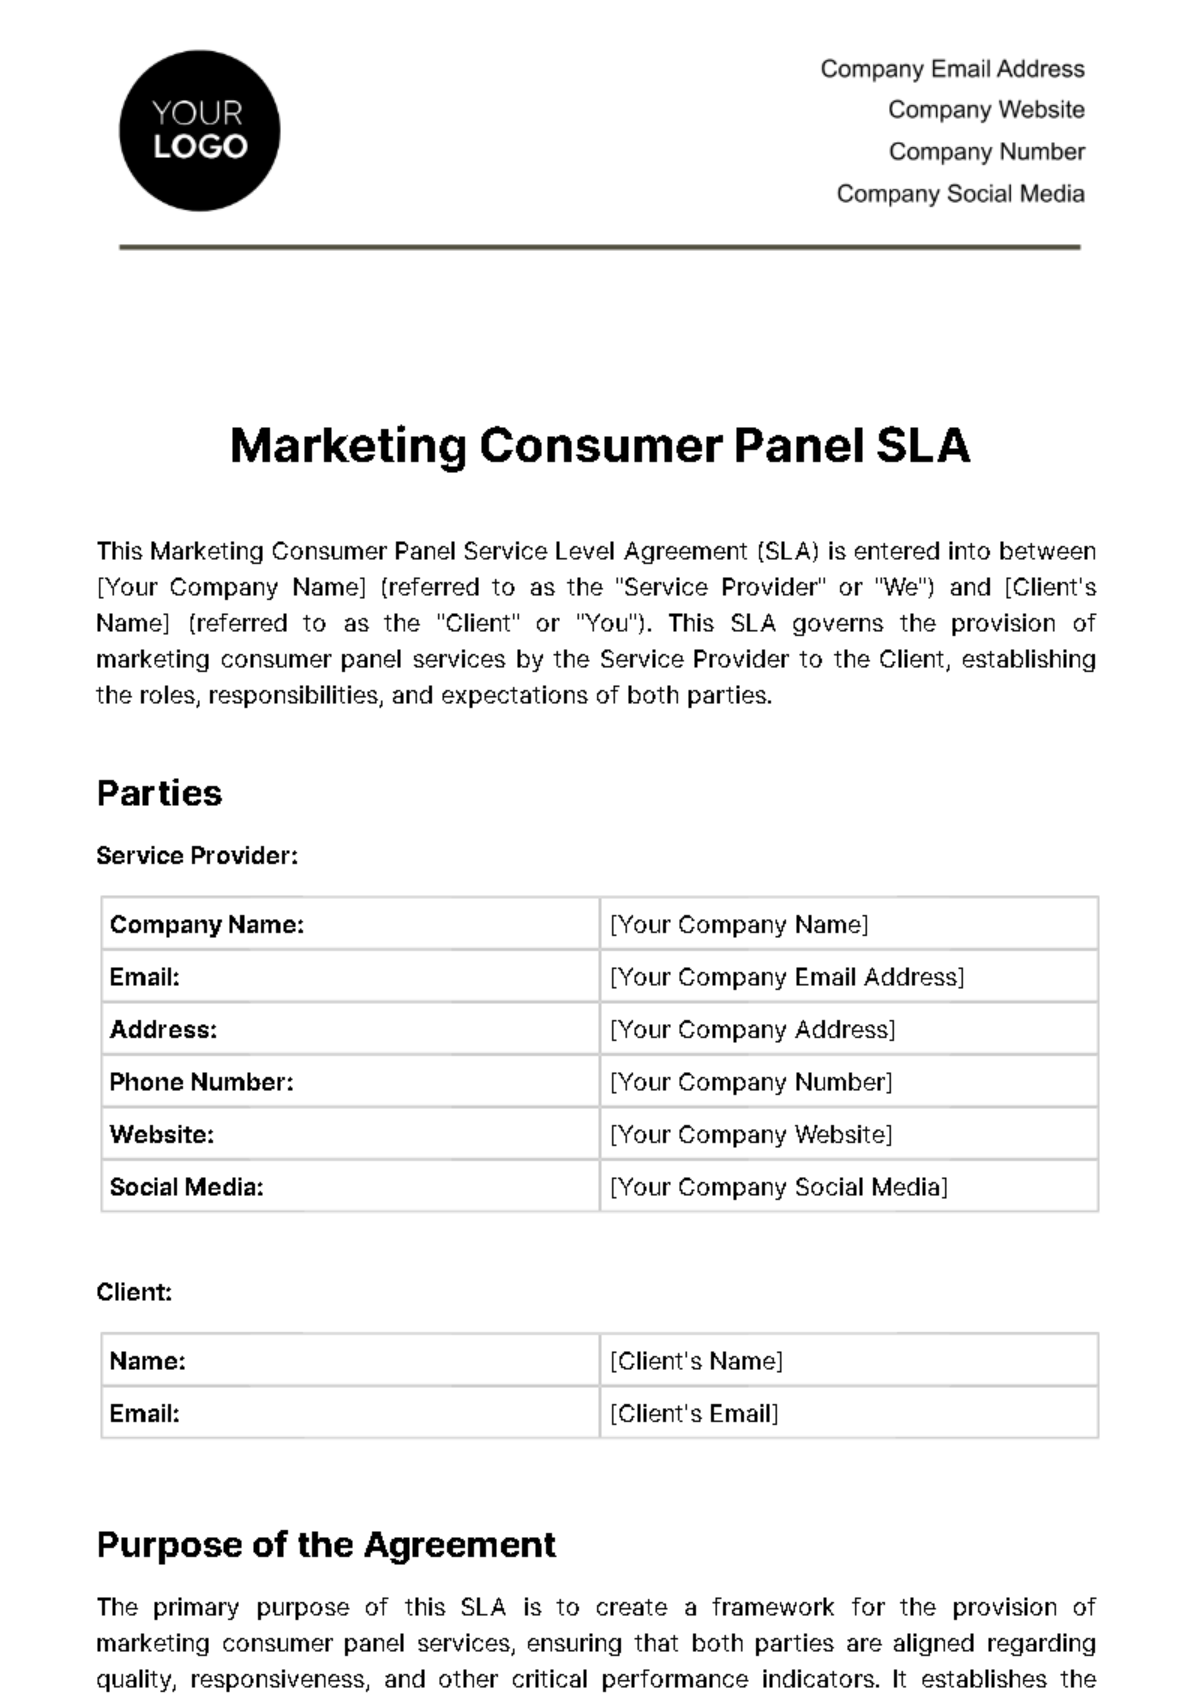 Free Marketing Consumer Panel SLA Template